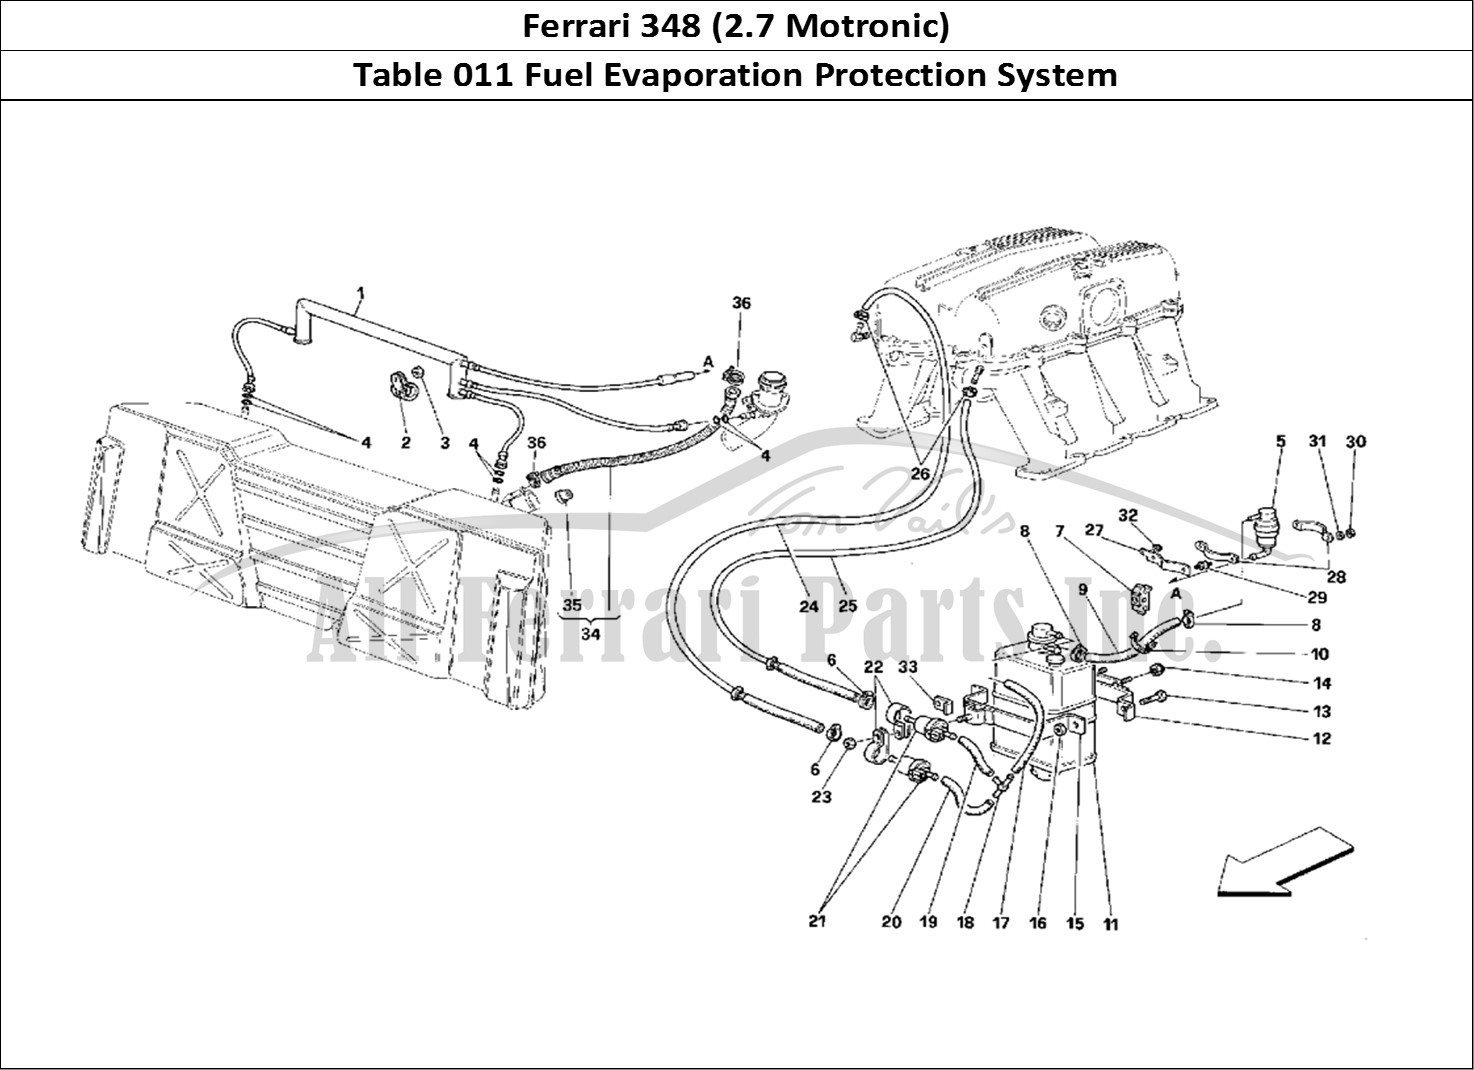 Ferrari Parts Ferrari 348 (2.7 Motronic) Page 011 Antievaporation Device